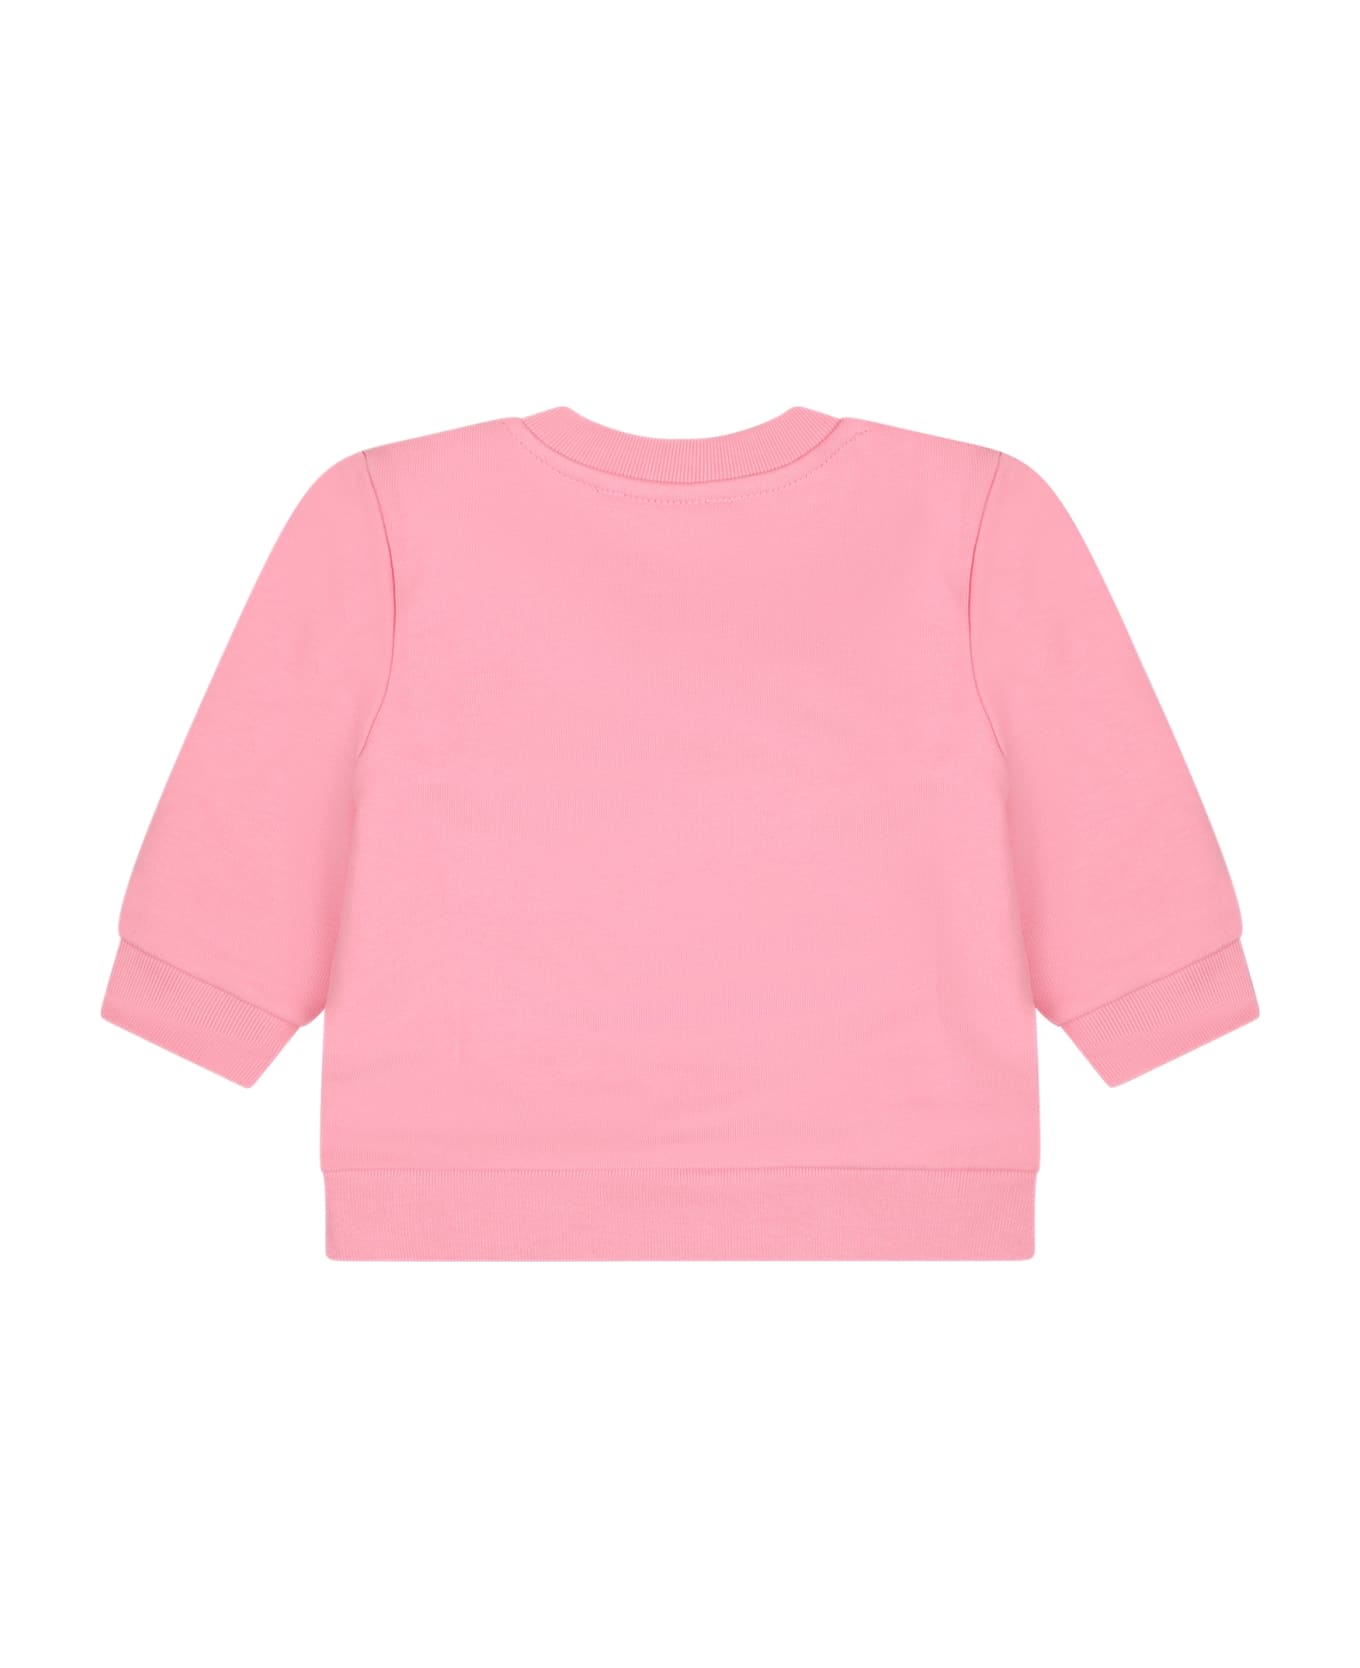 Marni Pink Sweatshirt For Baby Girl With Logo - Pink